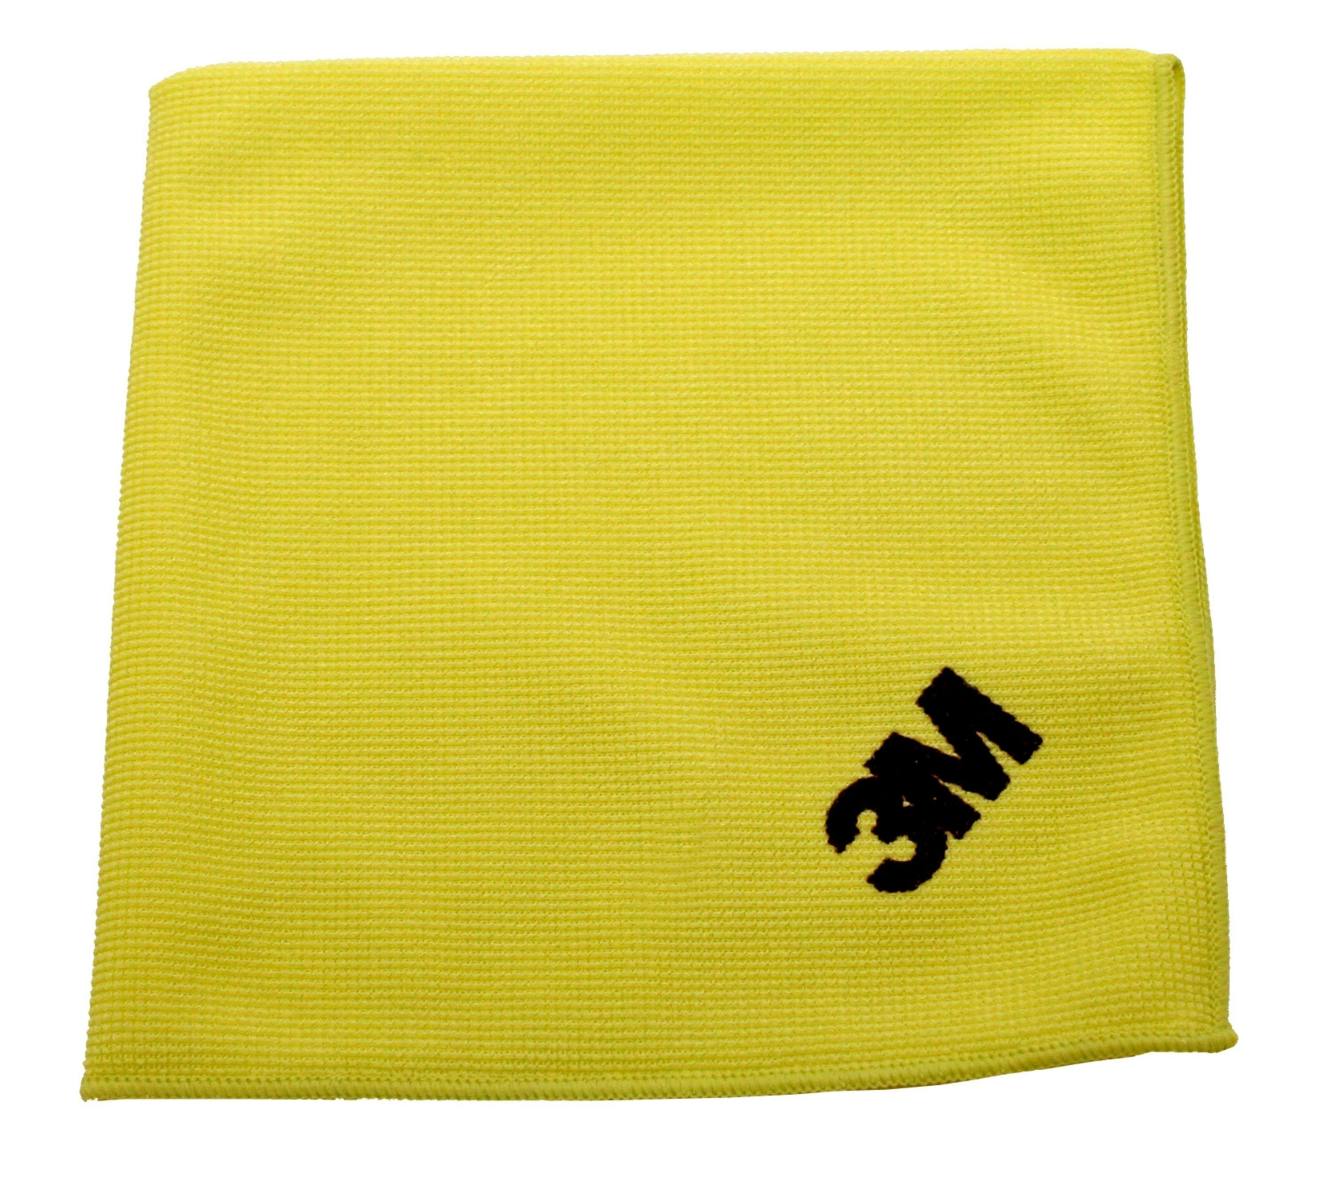 3M Scotch-Brite High-performance microfibre cloth 2011, yellow, 32 x 36 cm